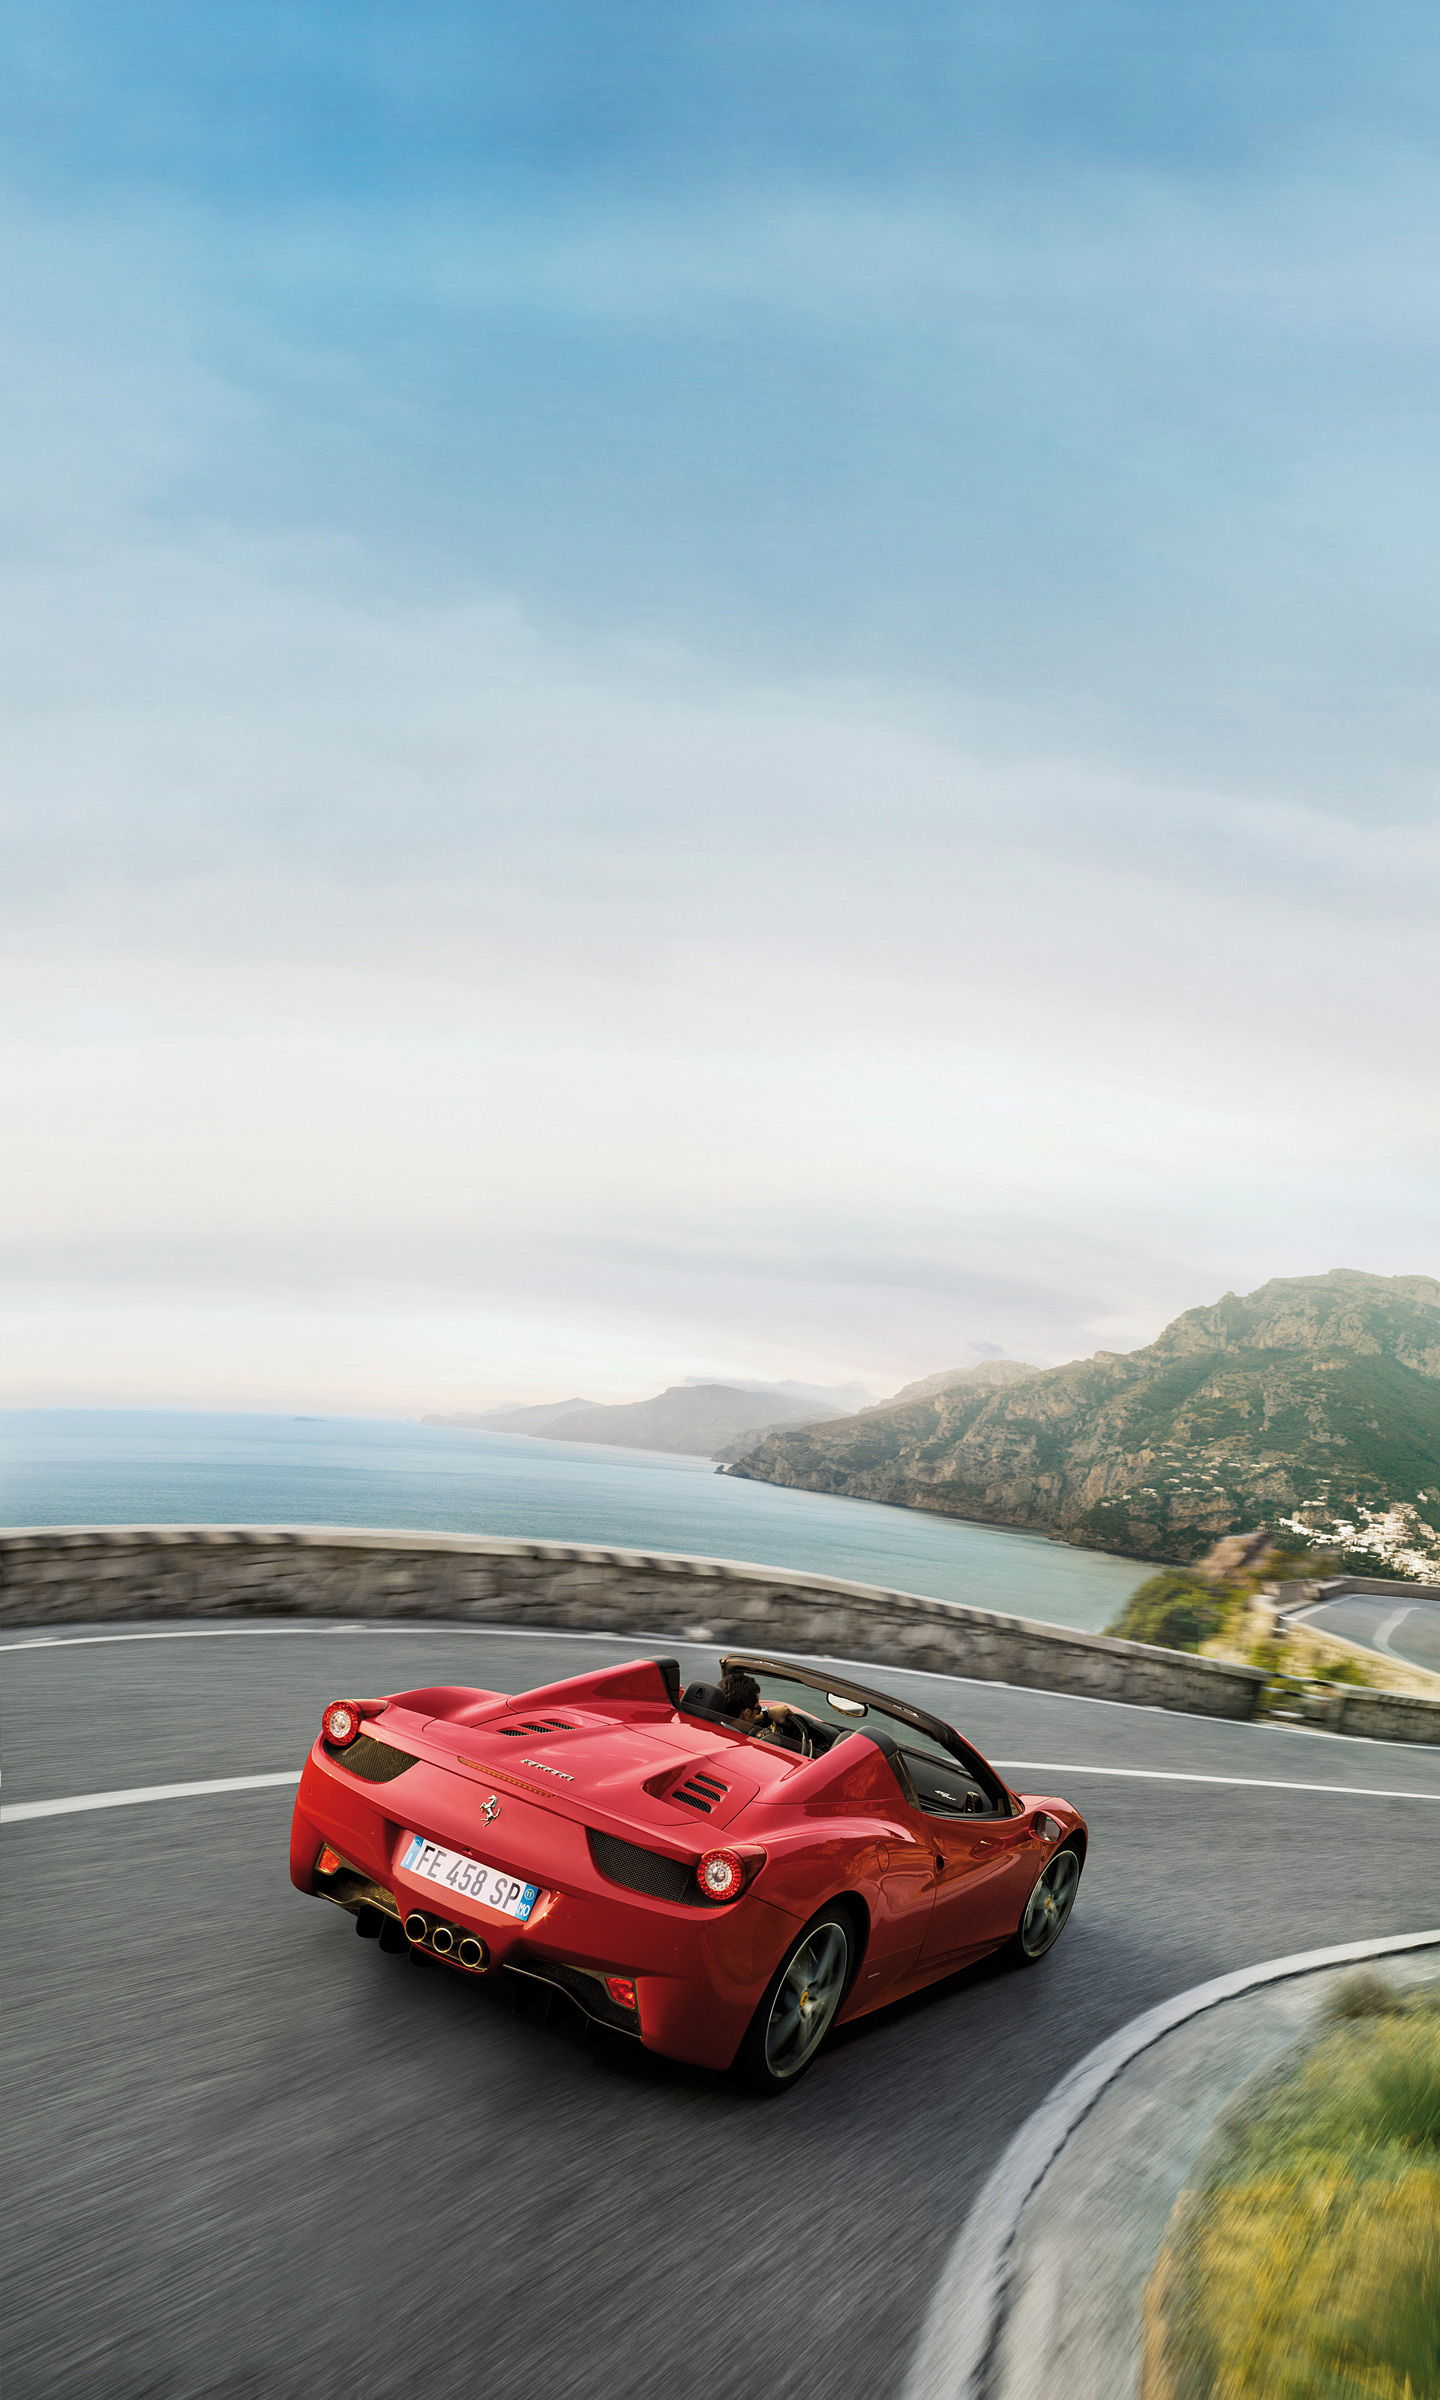  2013 Ferrari 458 Spider Wallpaper.